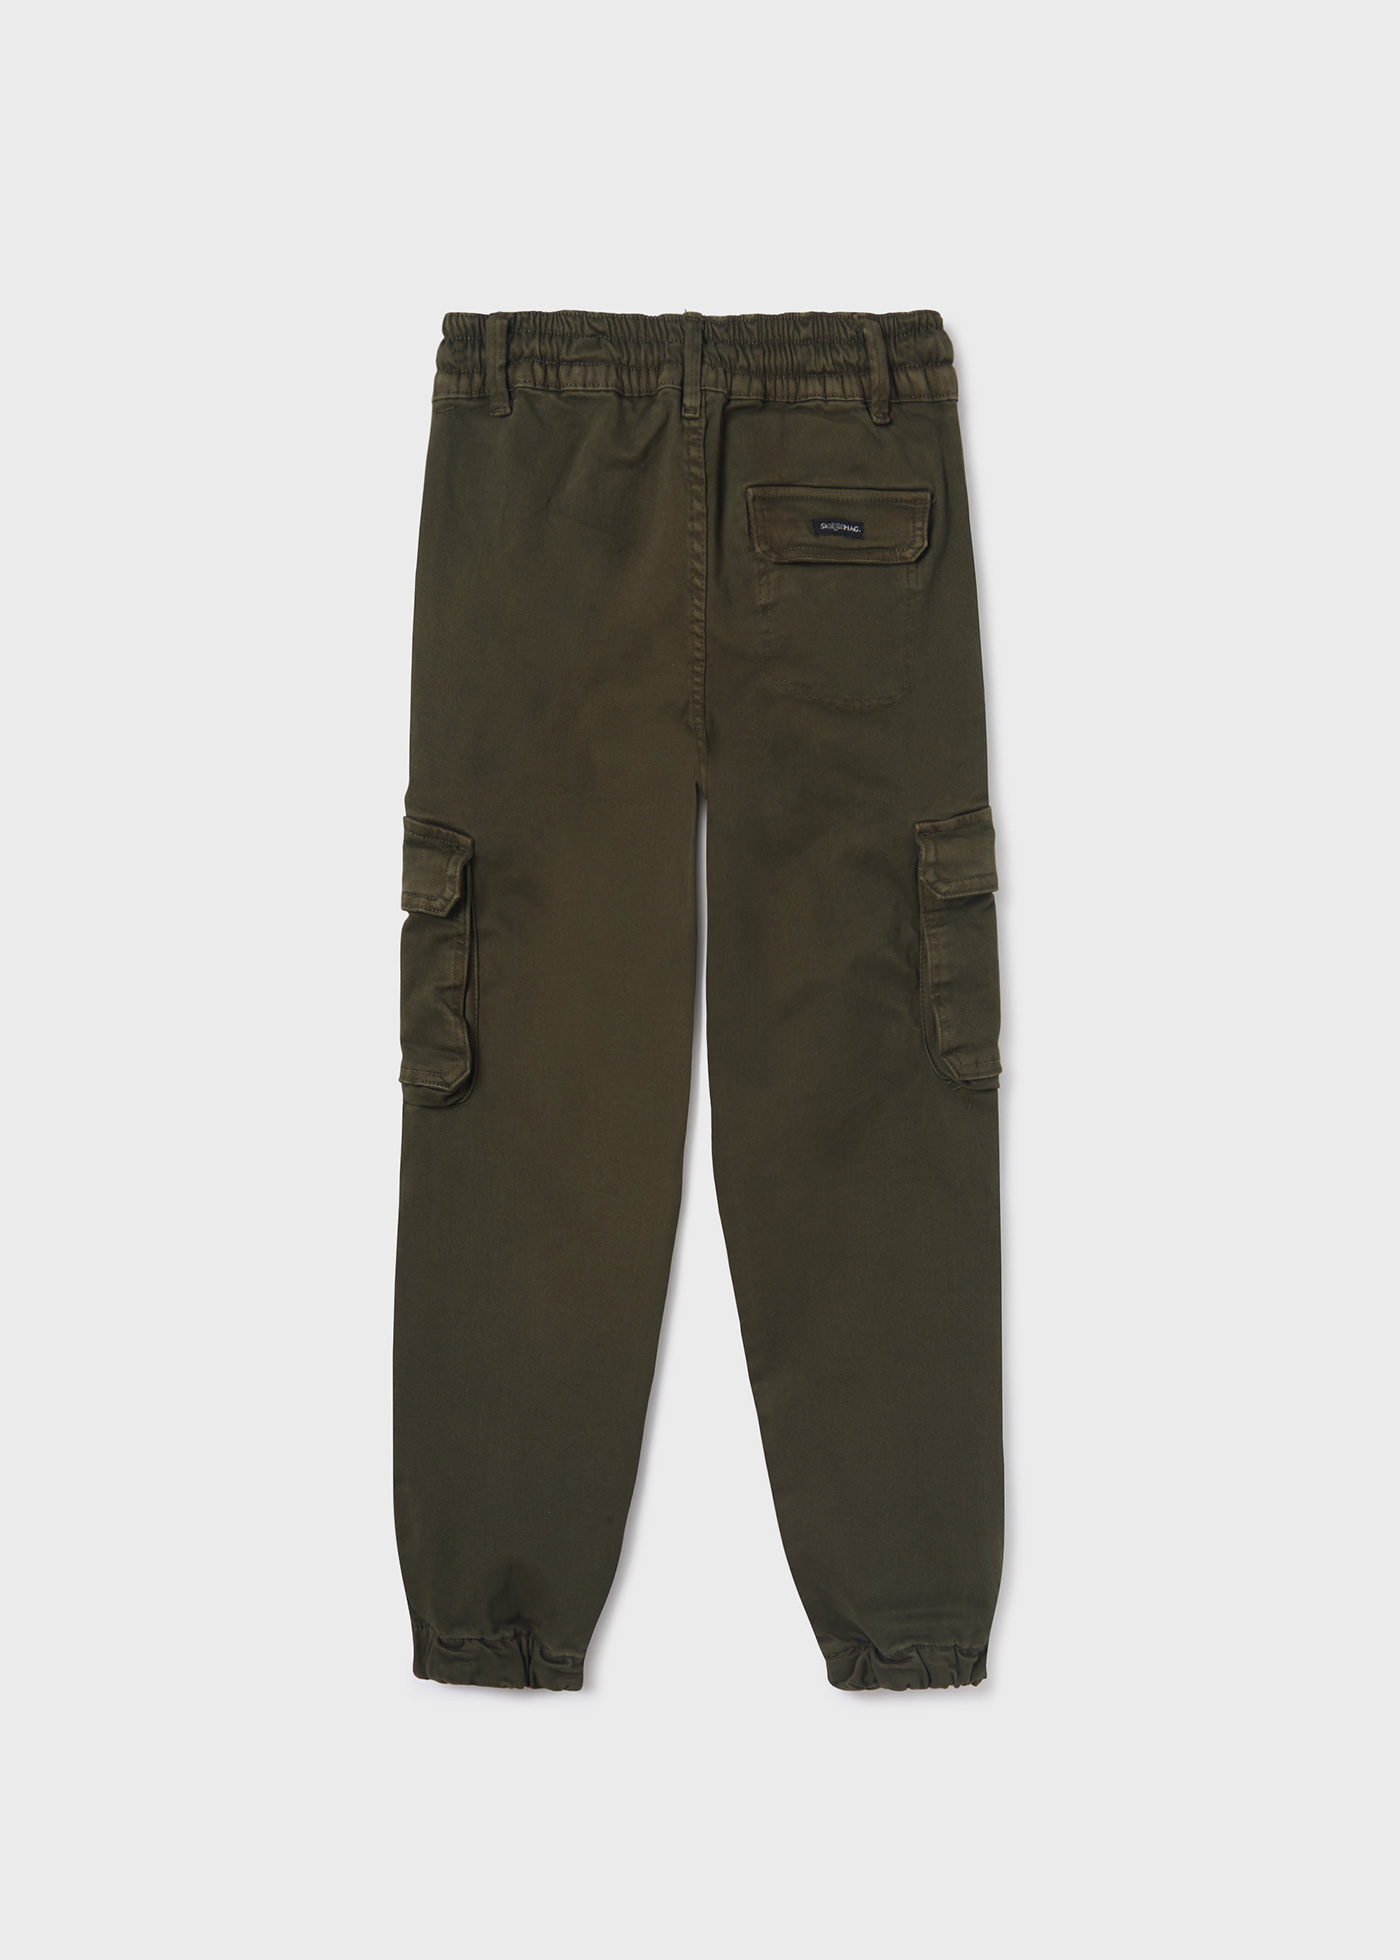 K-D Boys Cargo Track Pants - Tan - Size 10 | BIG W